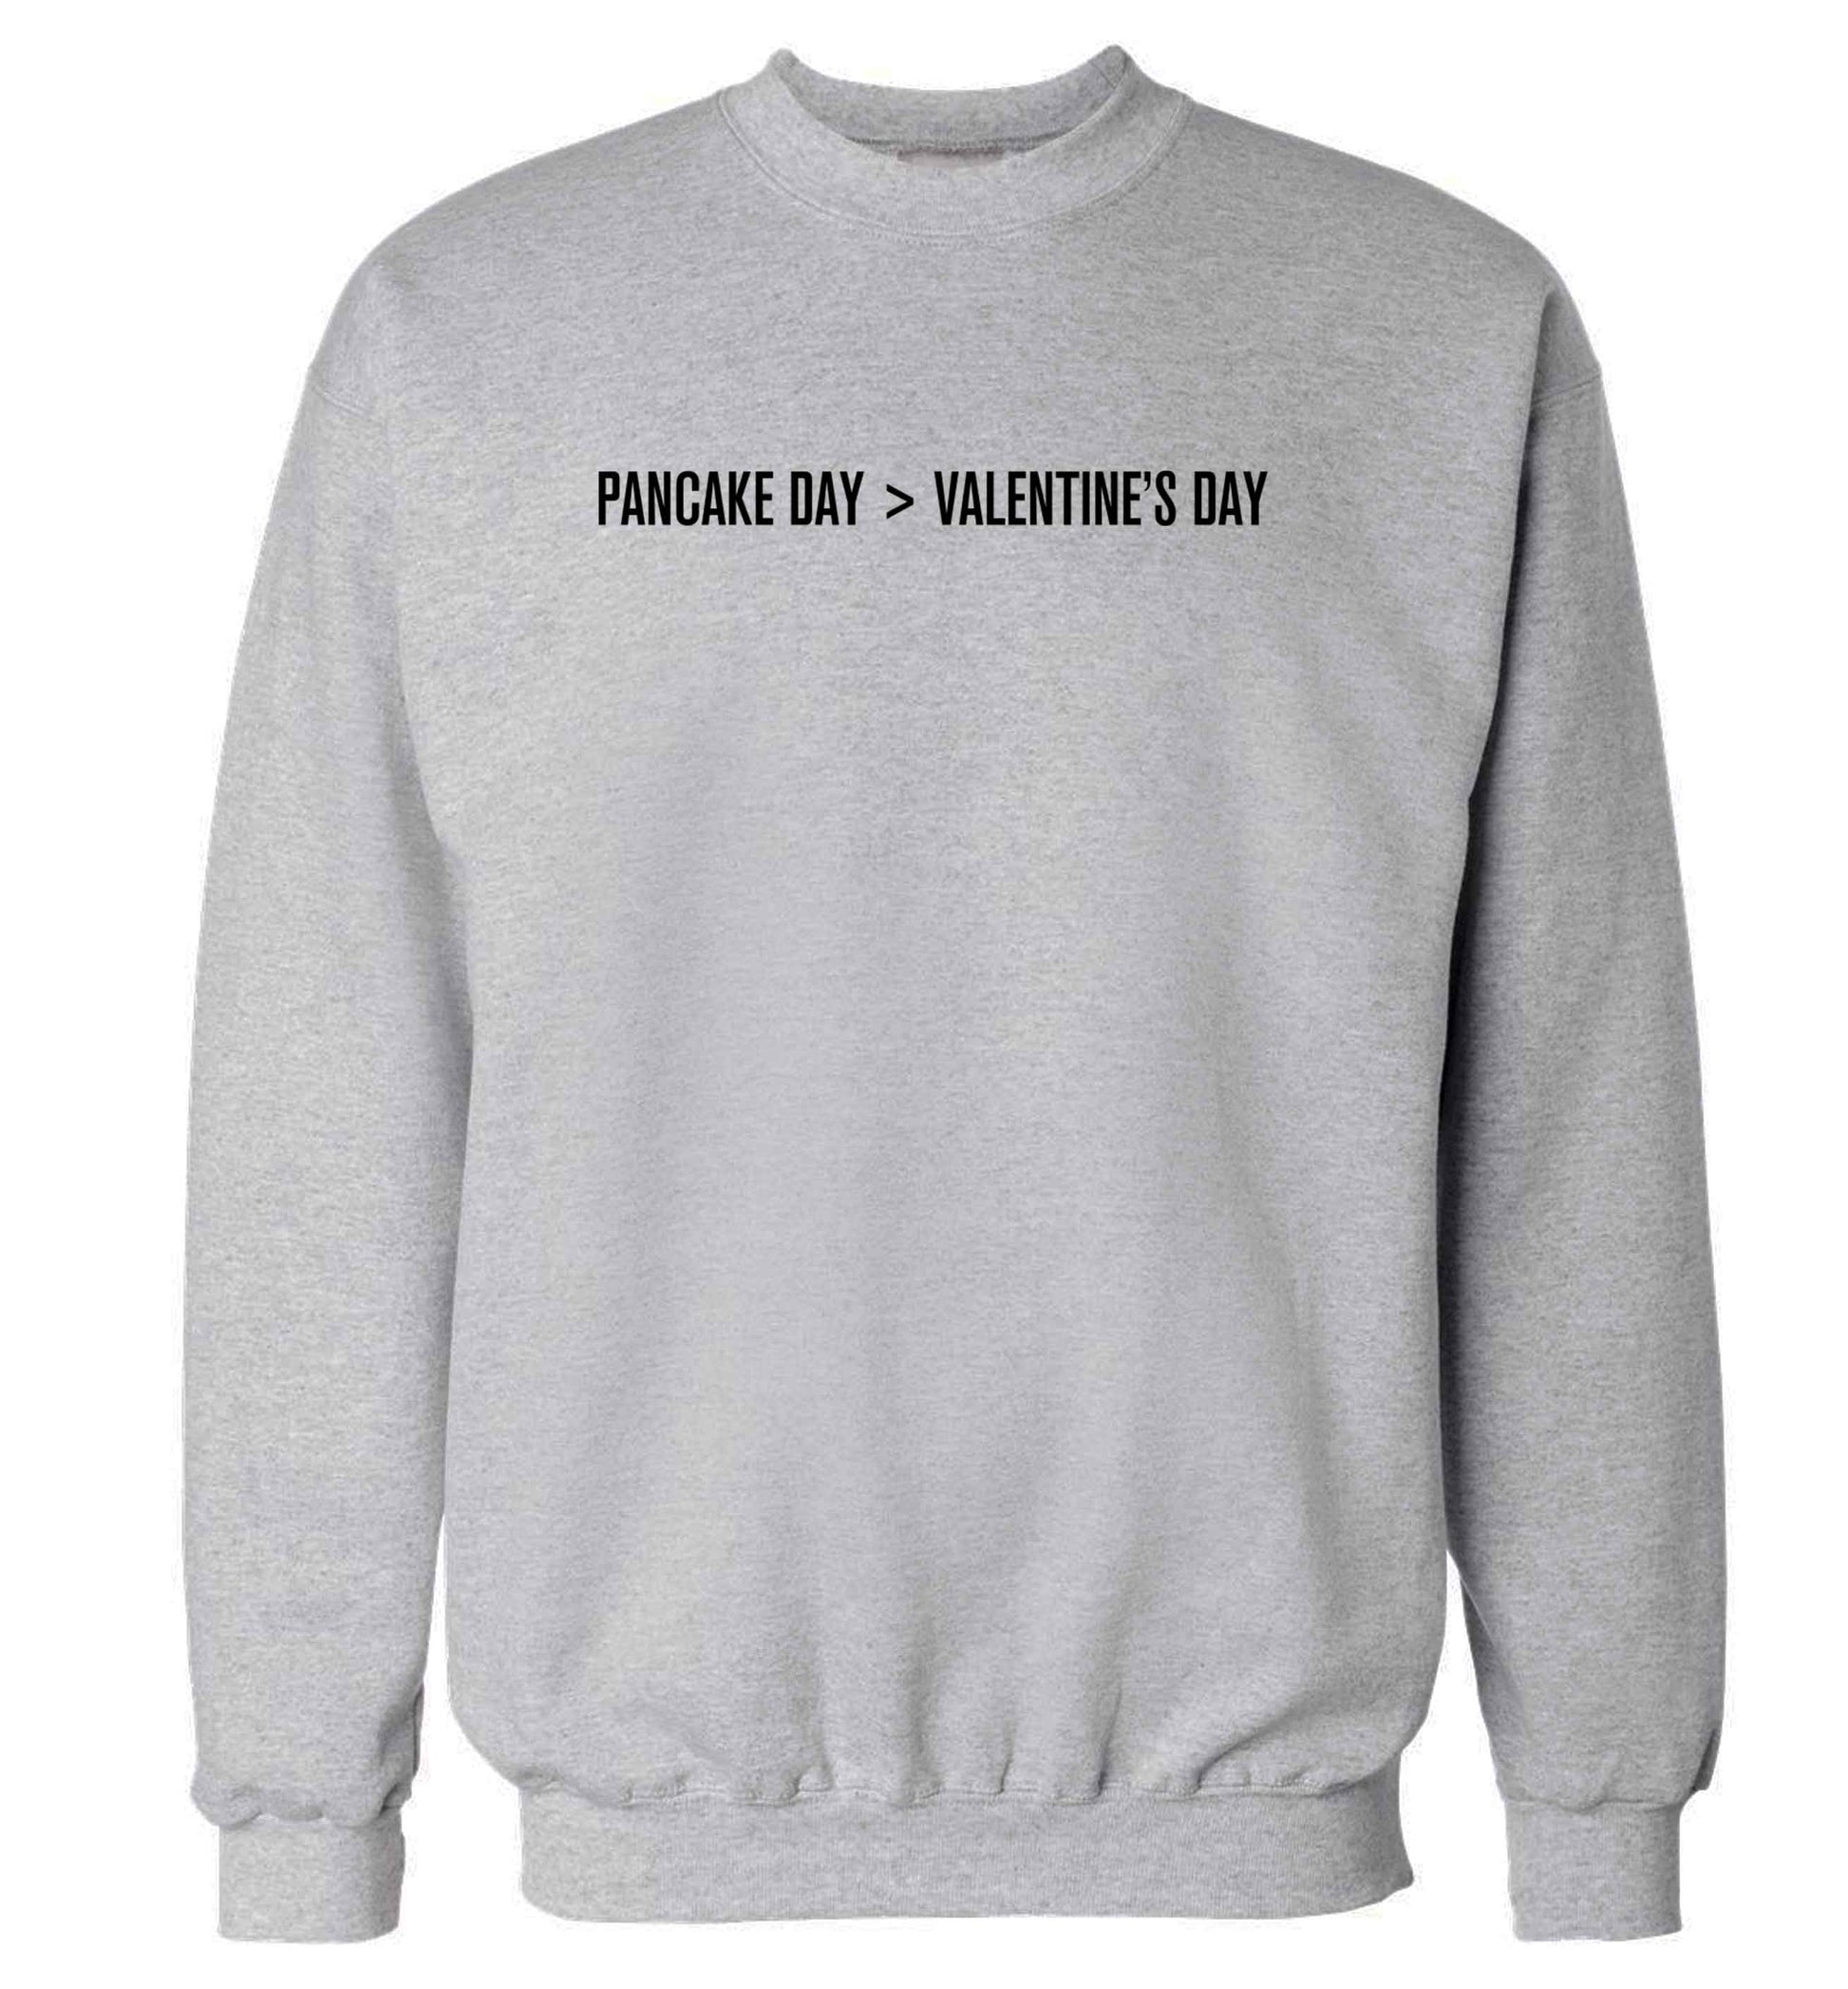 Pancake day > valentines day adult's unisex grey sweater 2XL